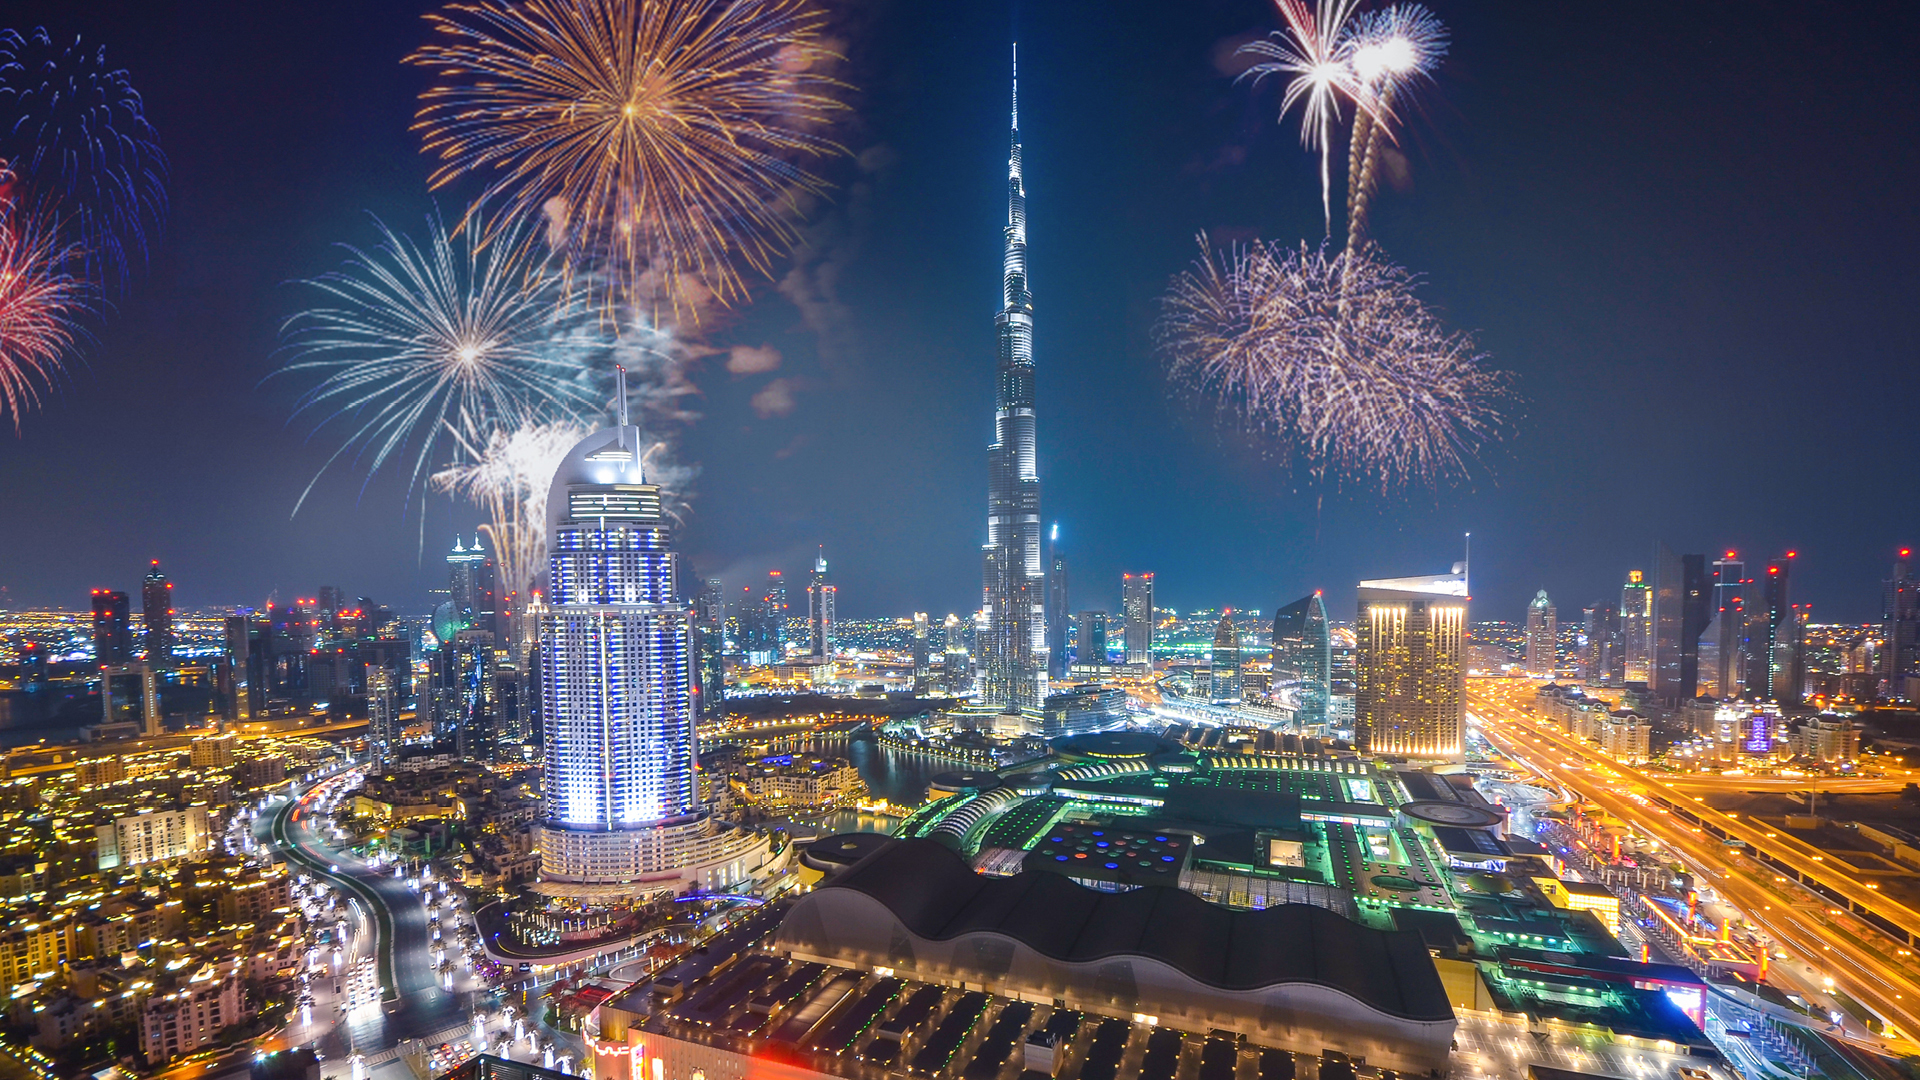 Dubai prepares to welcome the world to Expo 2020